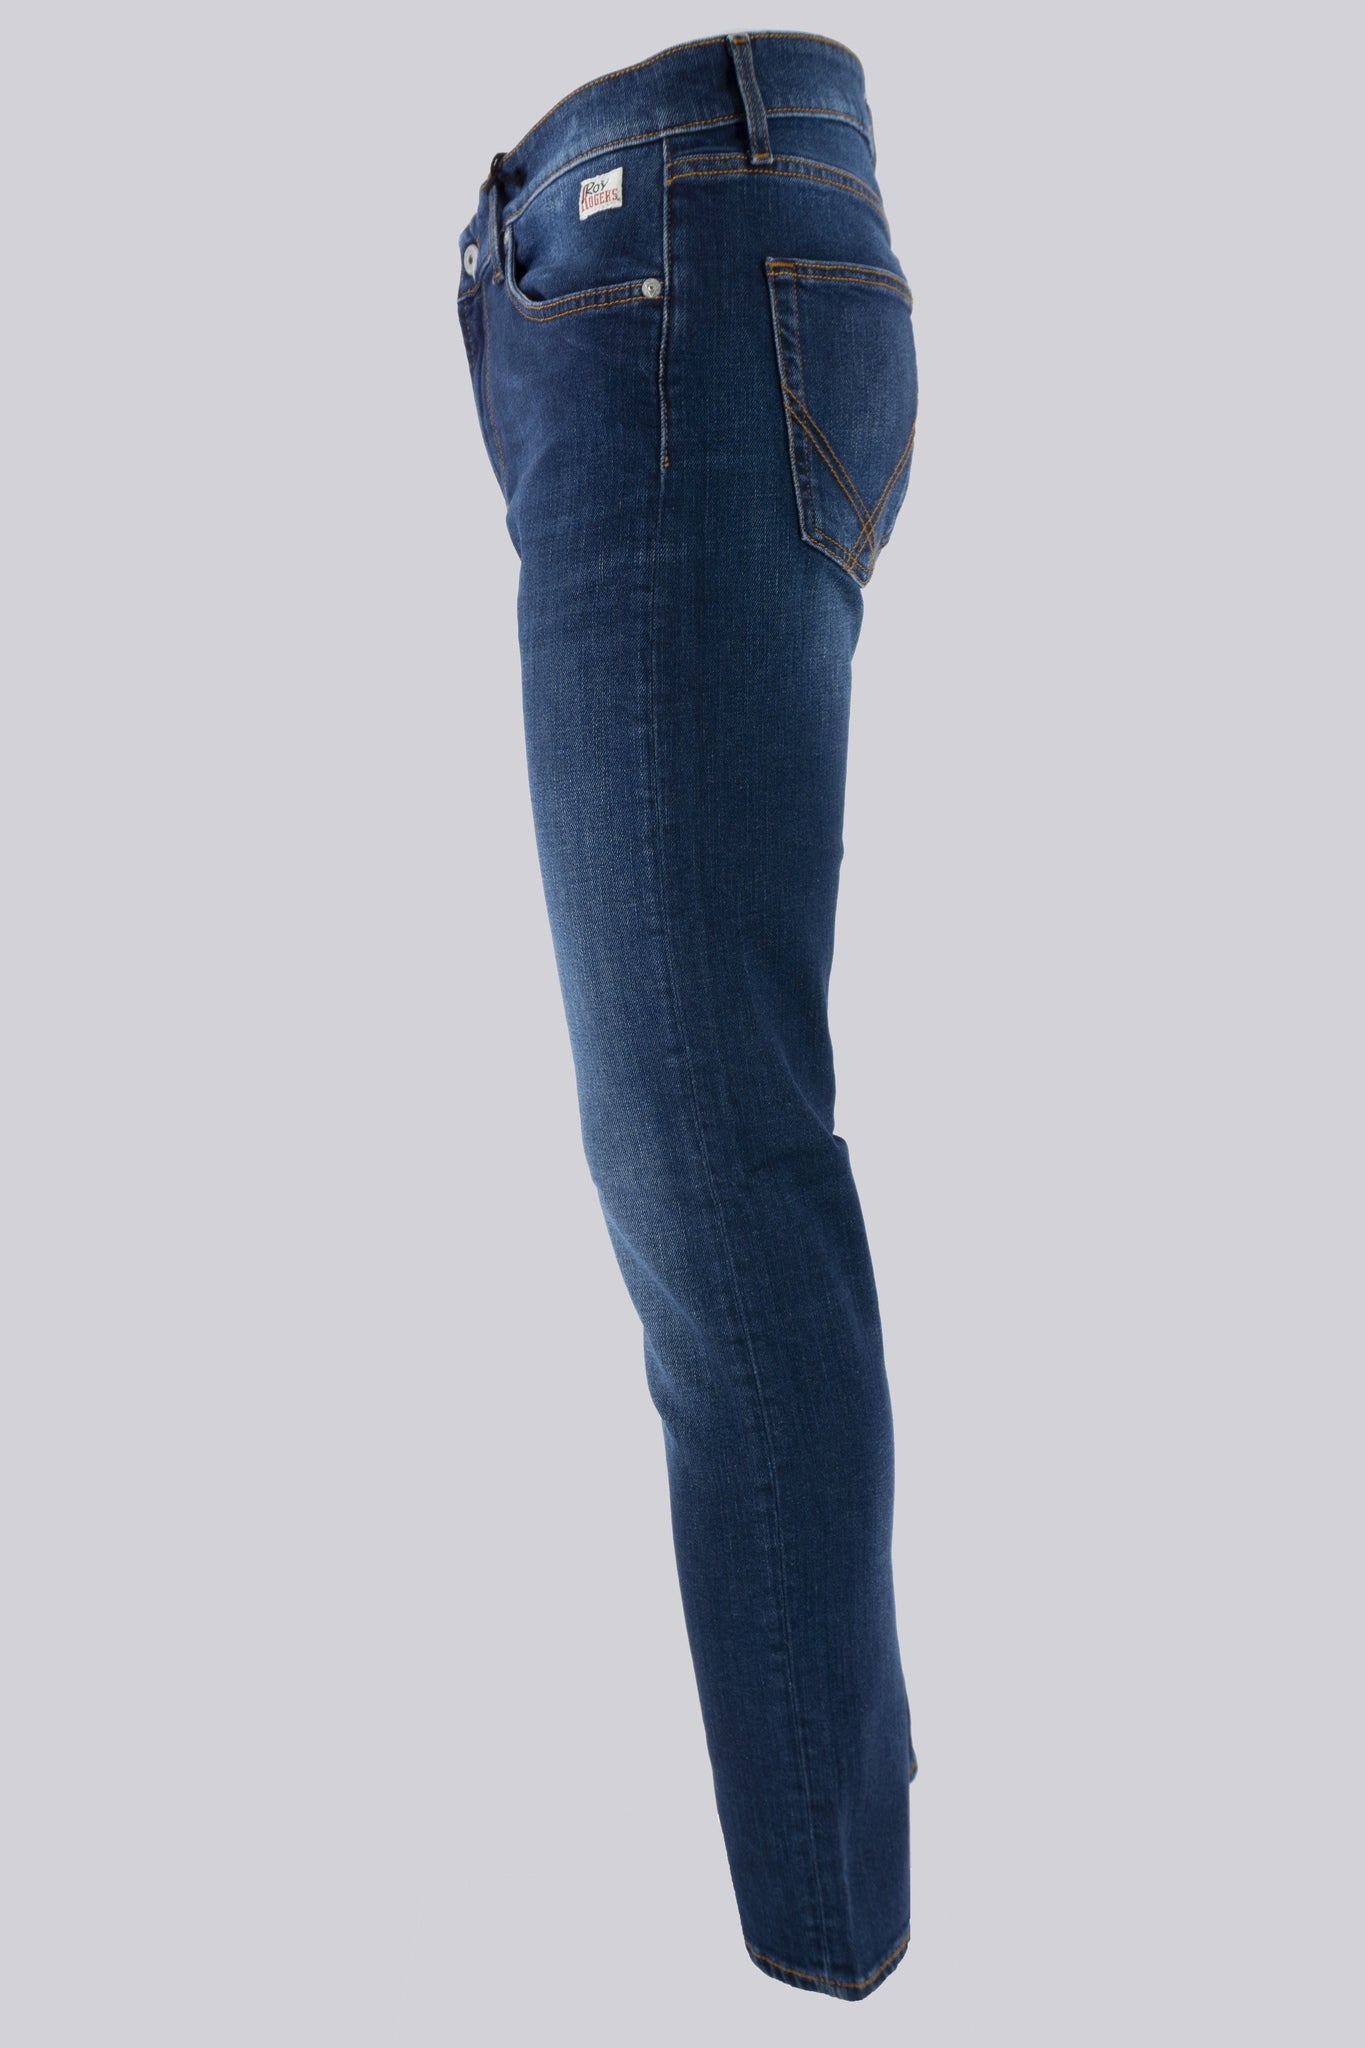 Jeans Lavaggio Medio Nozeleg / Jeans - Ideal Moda